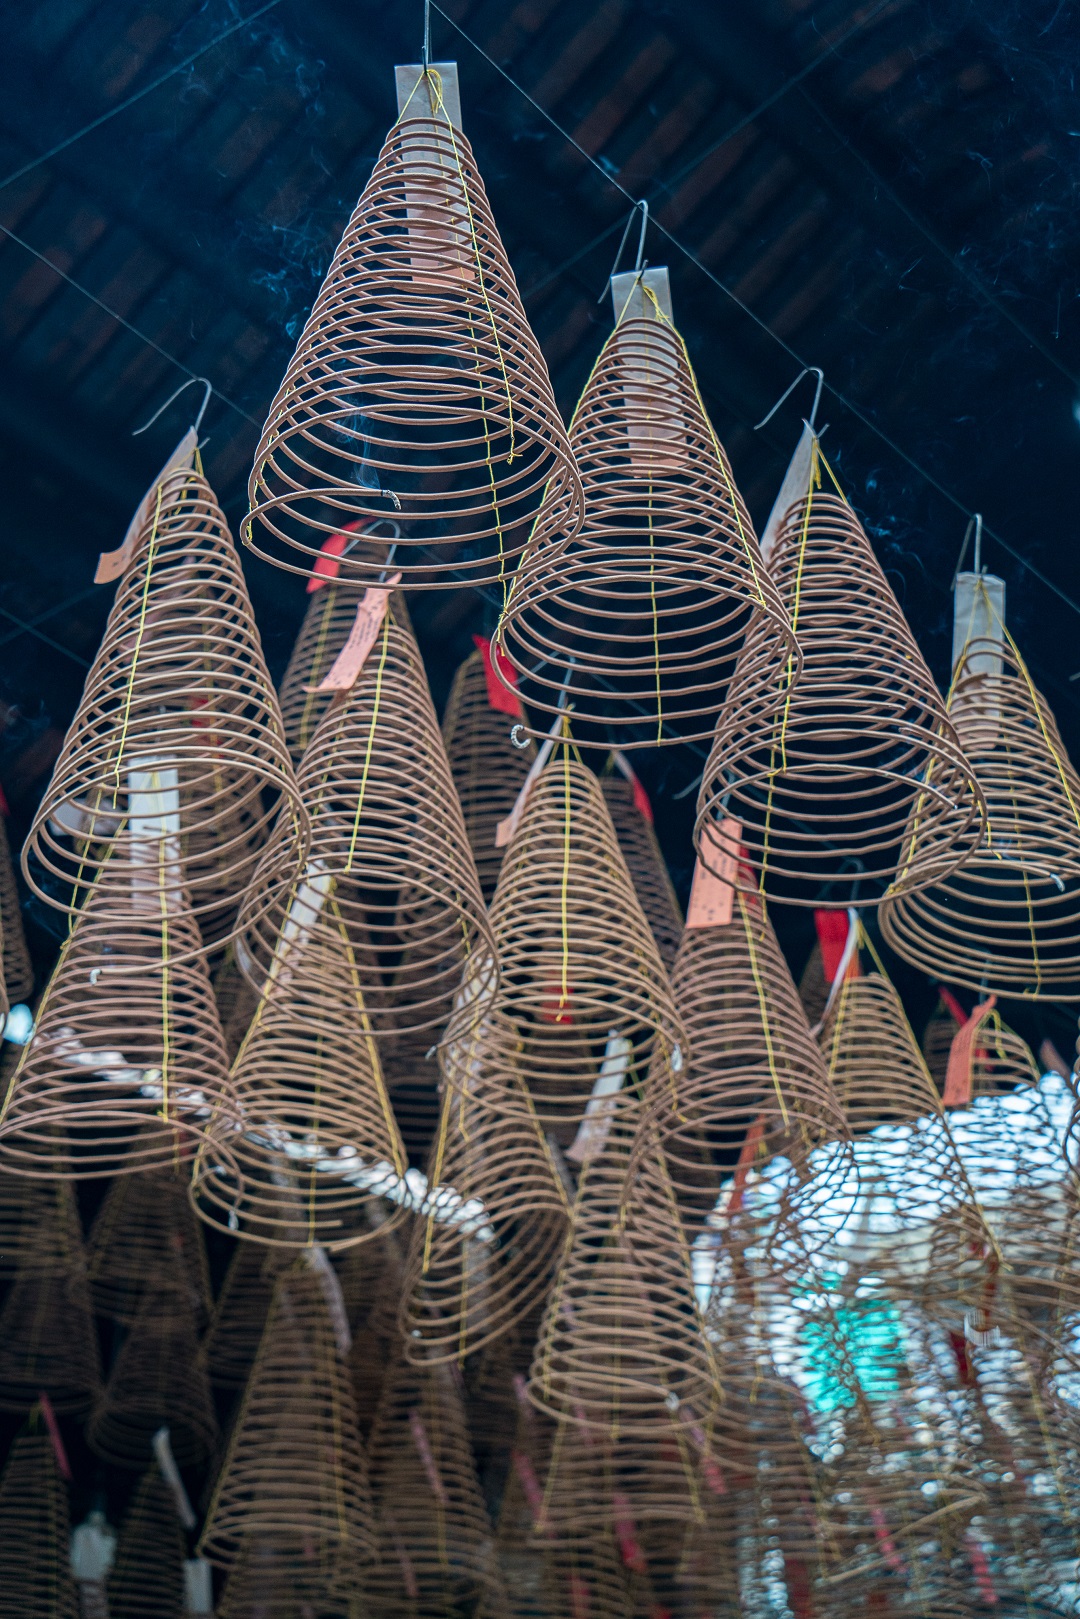 Besides architecture, conical incense coils are a highlight of Ba Thien Hau Temple. Photo: Nguyen Trung Au / Tuoi Tre News